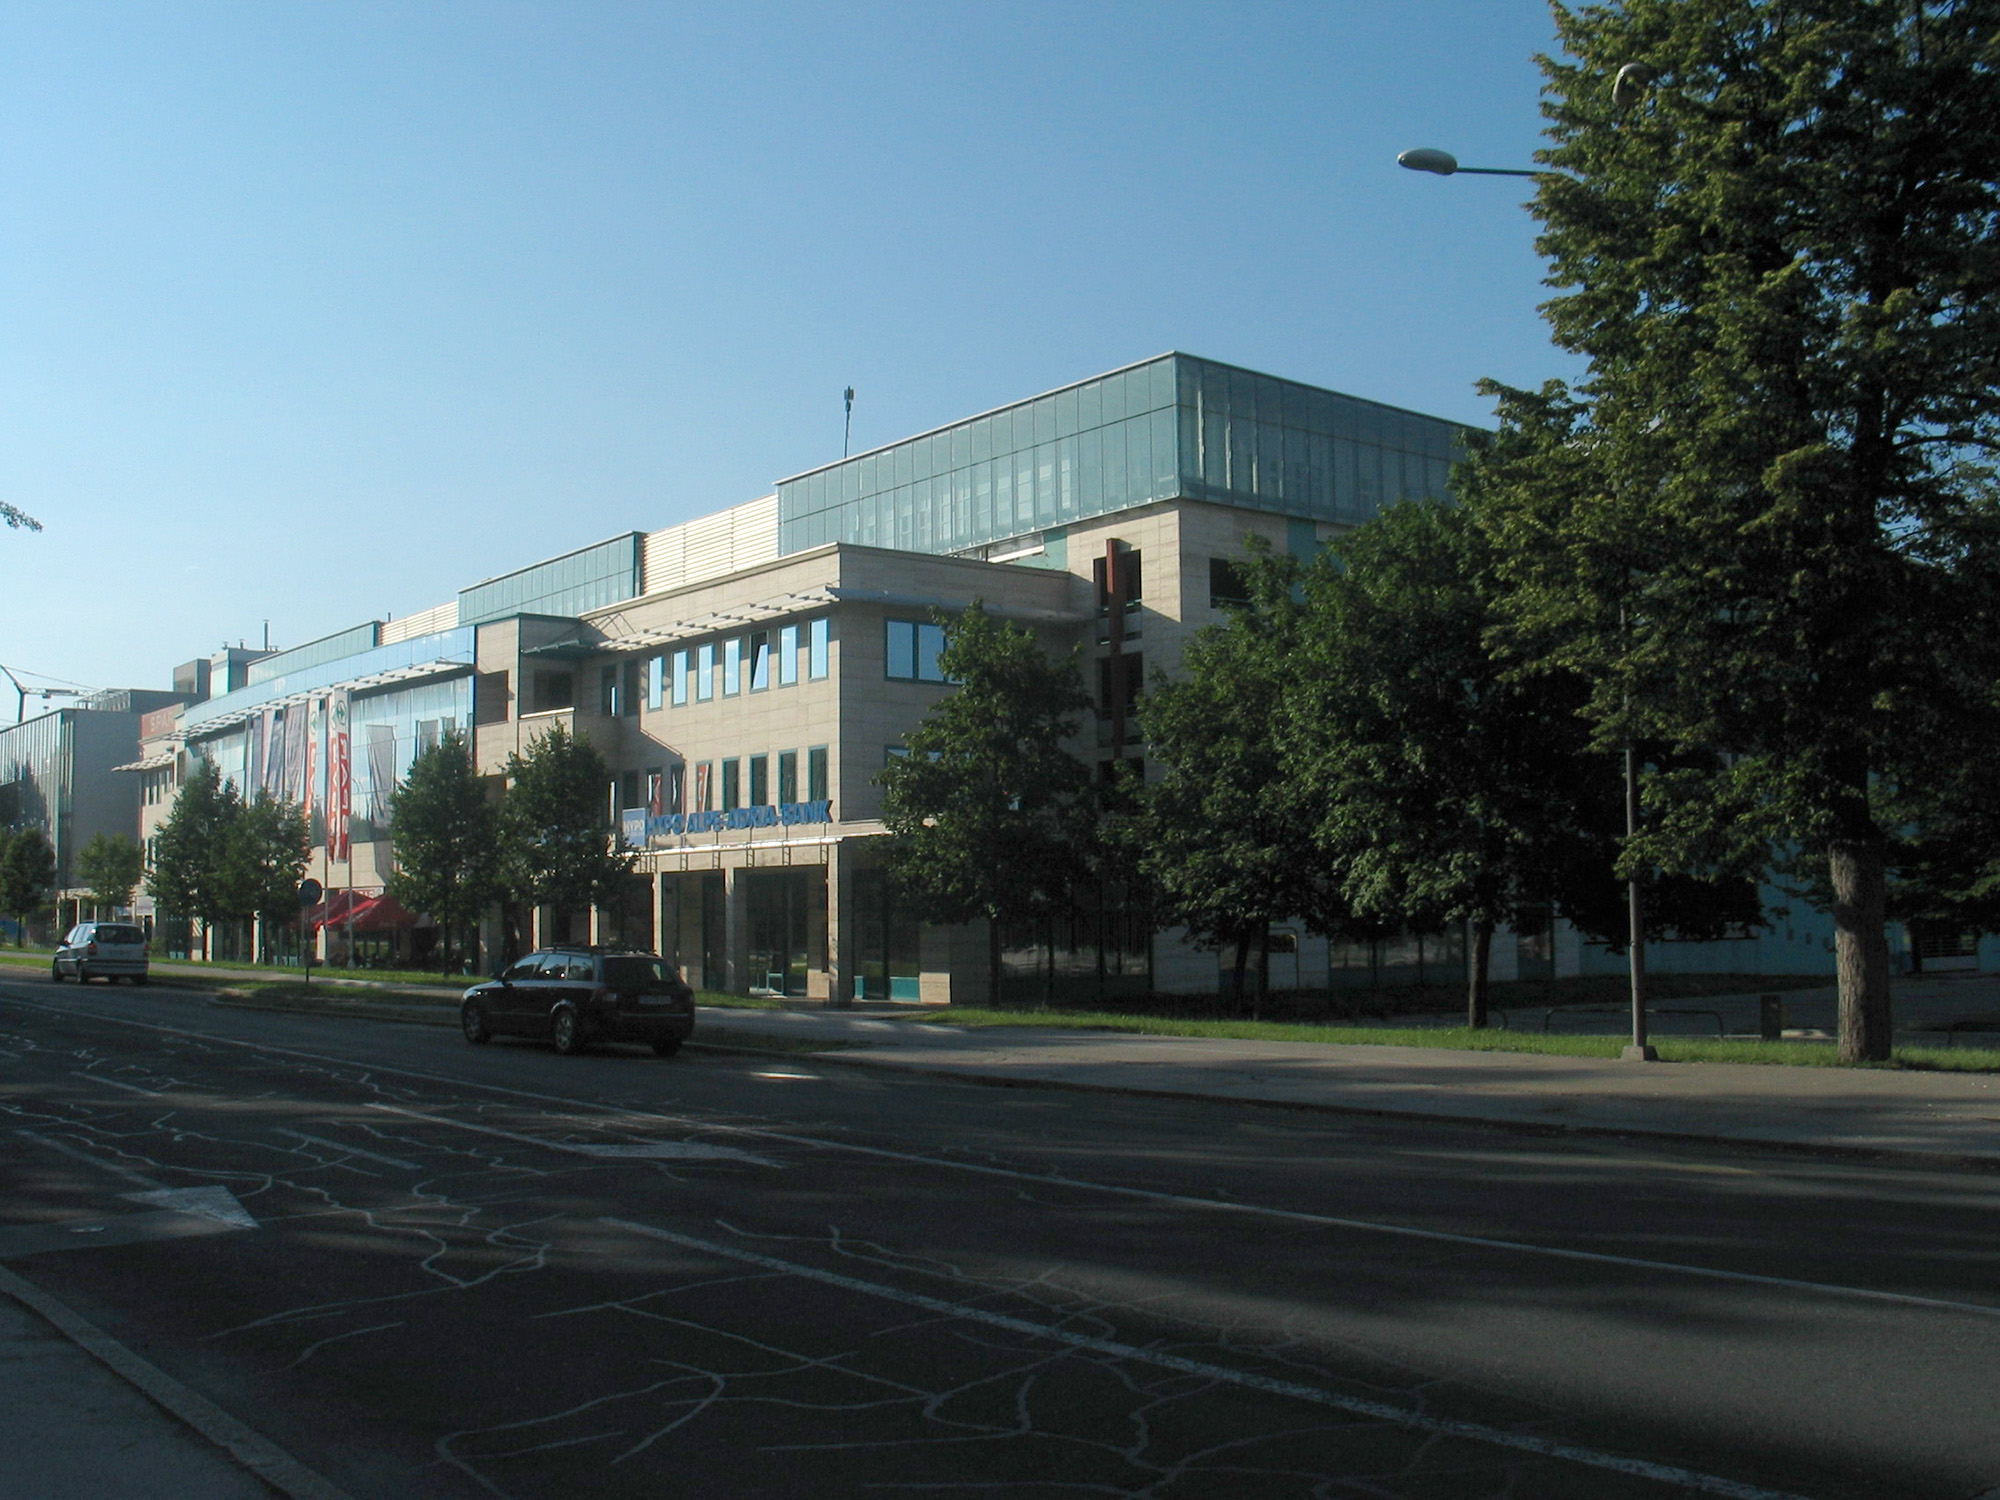 Garage and business facility Glazija in Celje